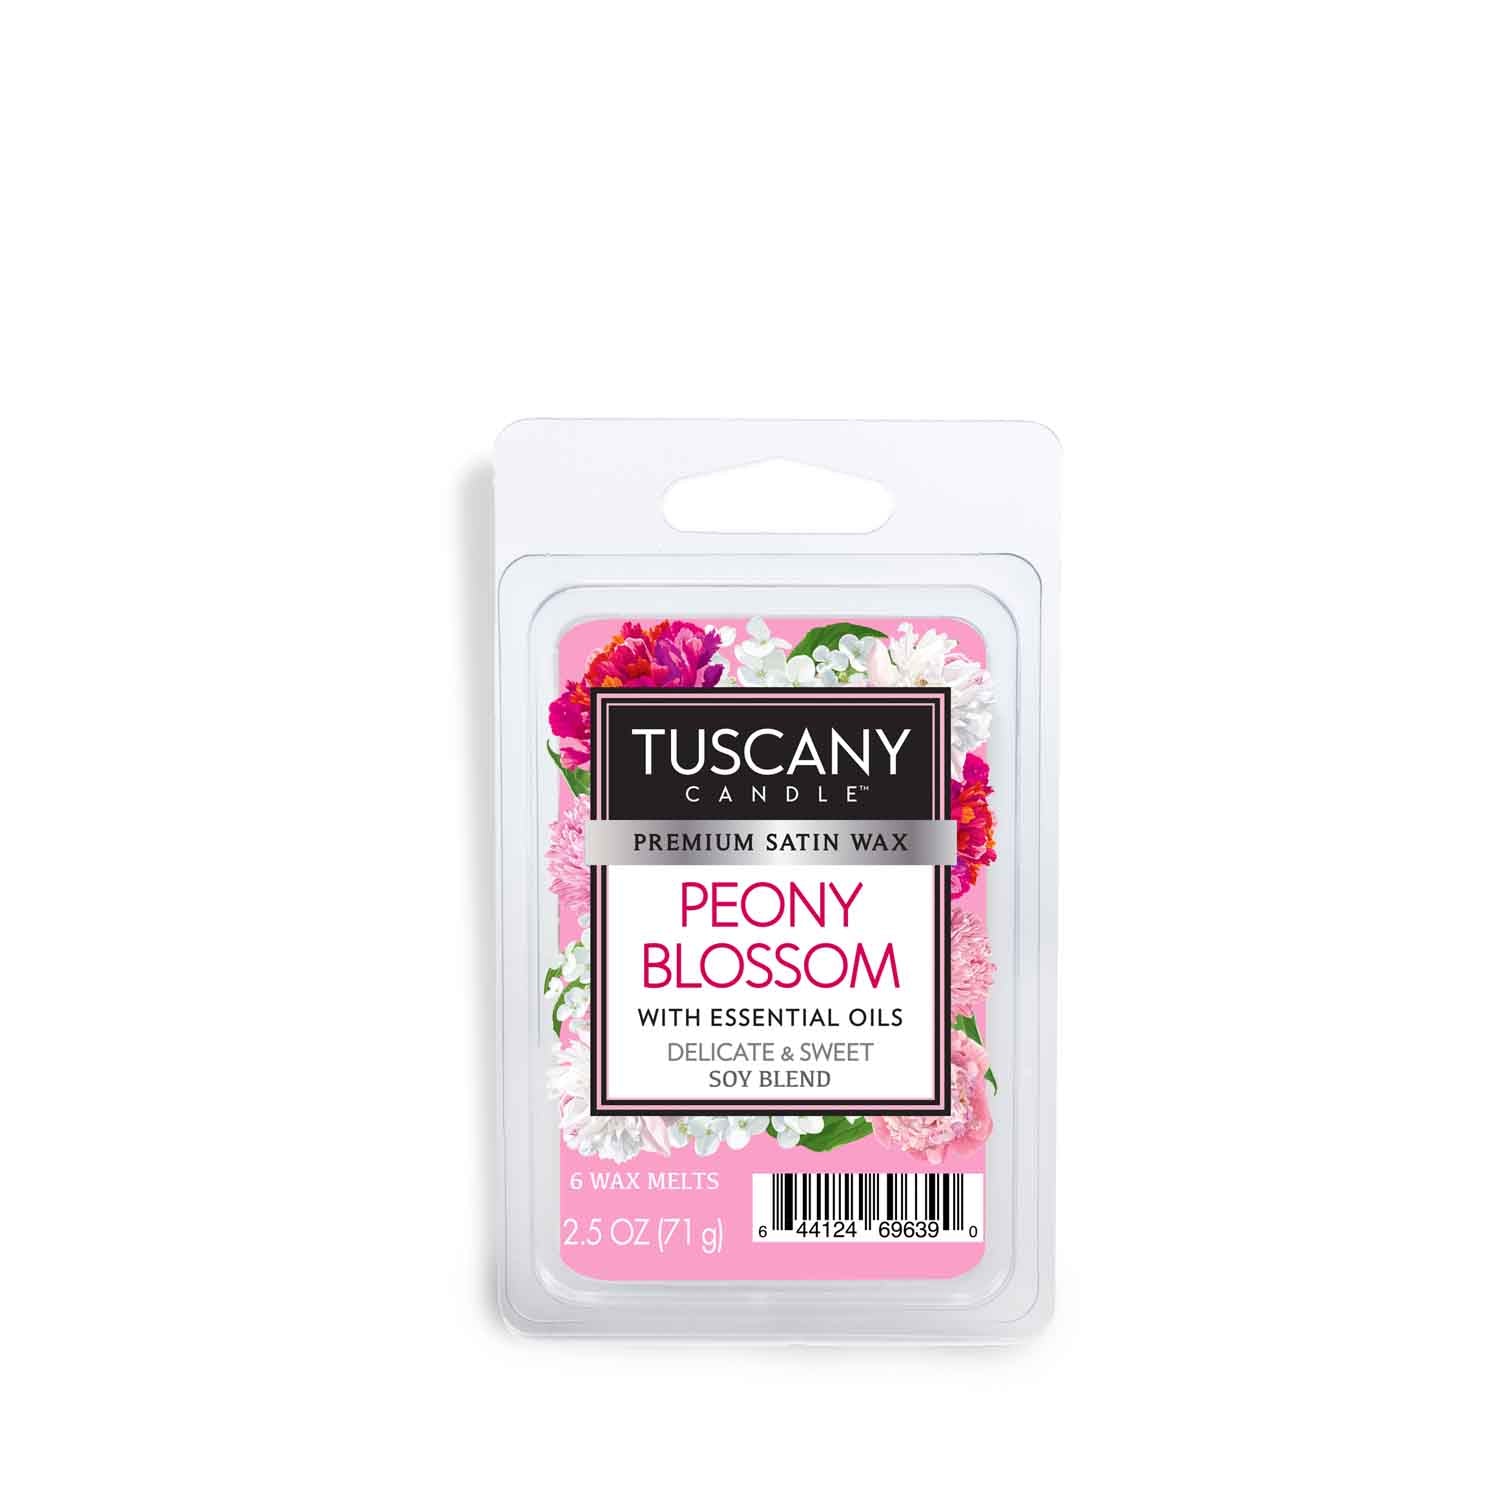 Tuscany Candle Wax Melts, Peony Blossom - 6 wax melts, 2.5 oz